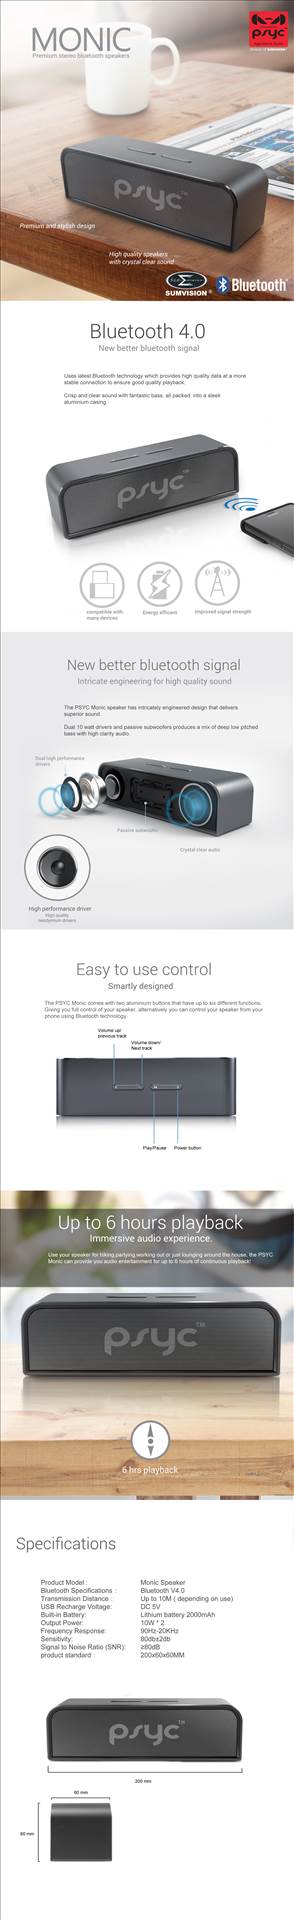 monic speaker brochure.jpg  by mike2704